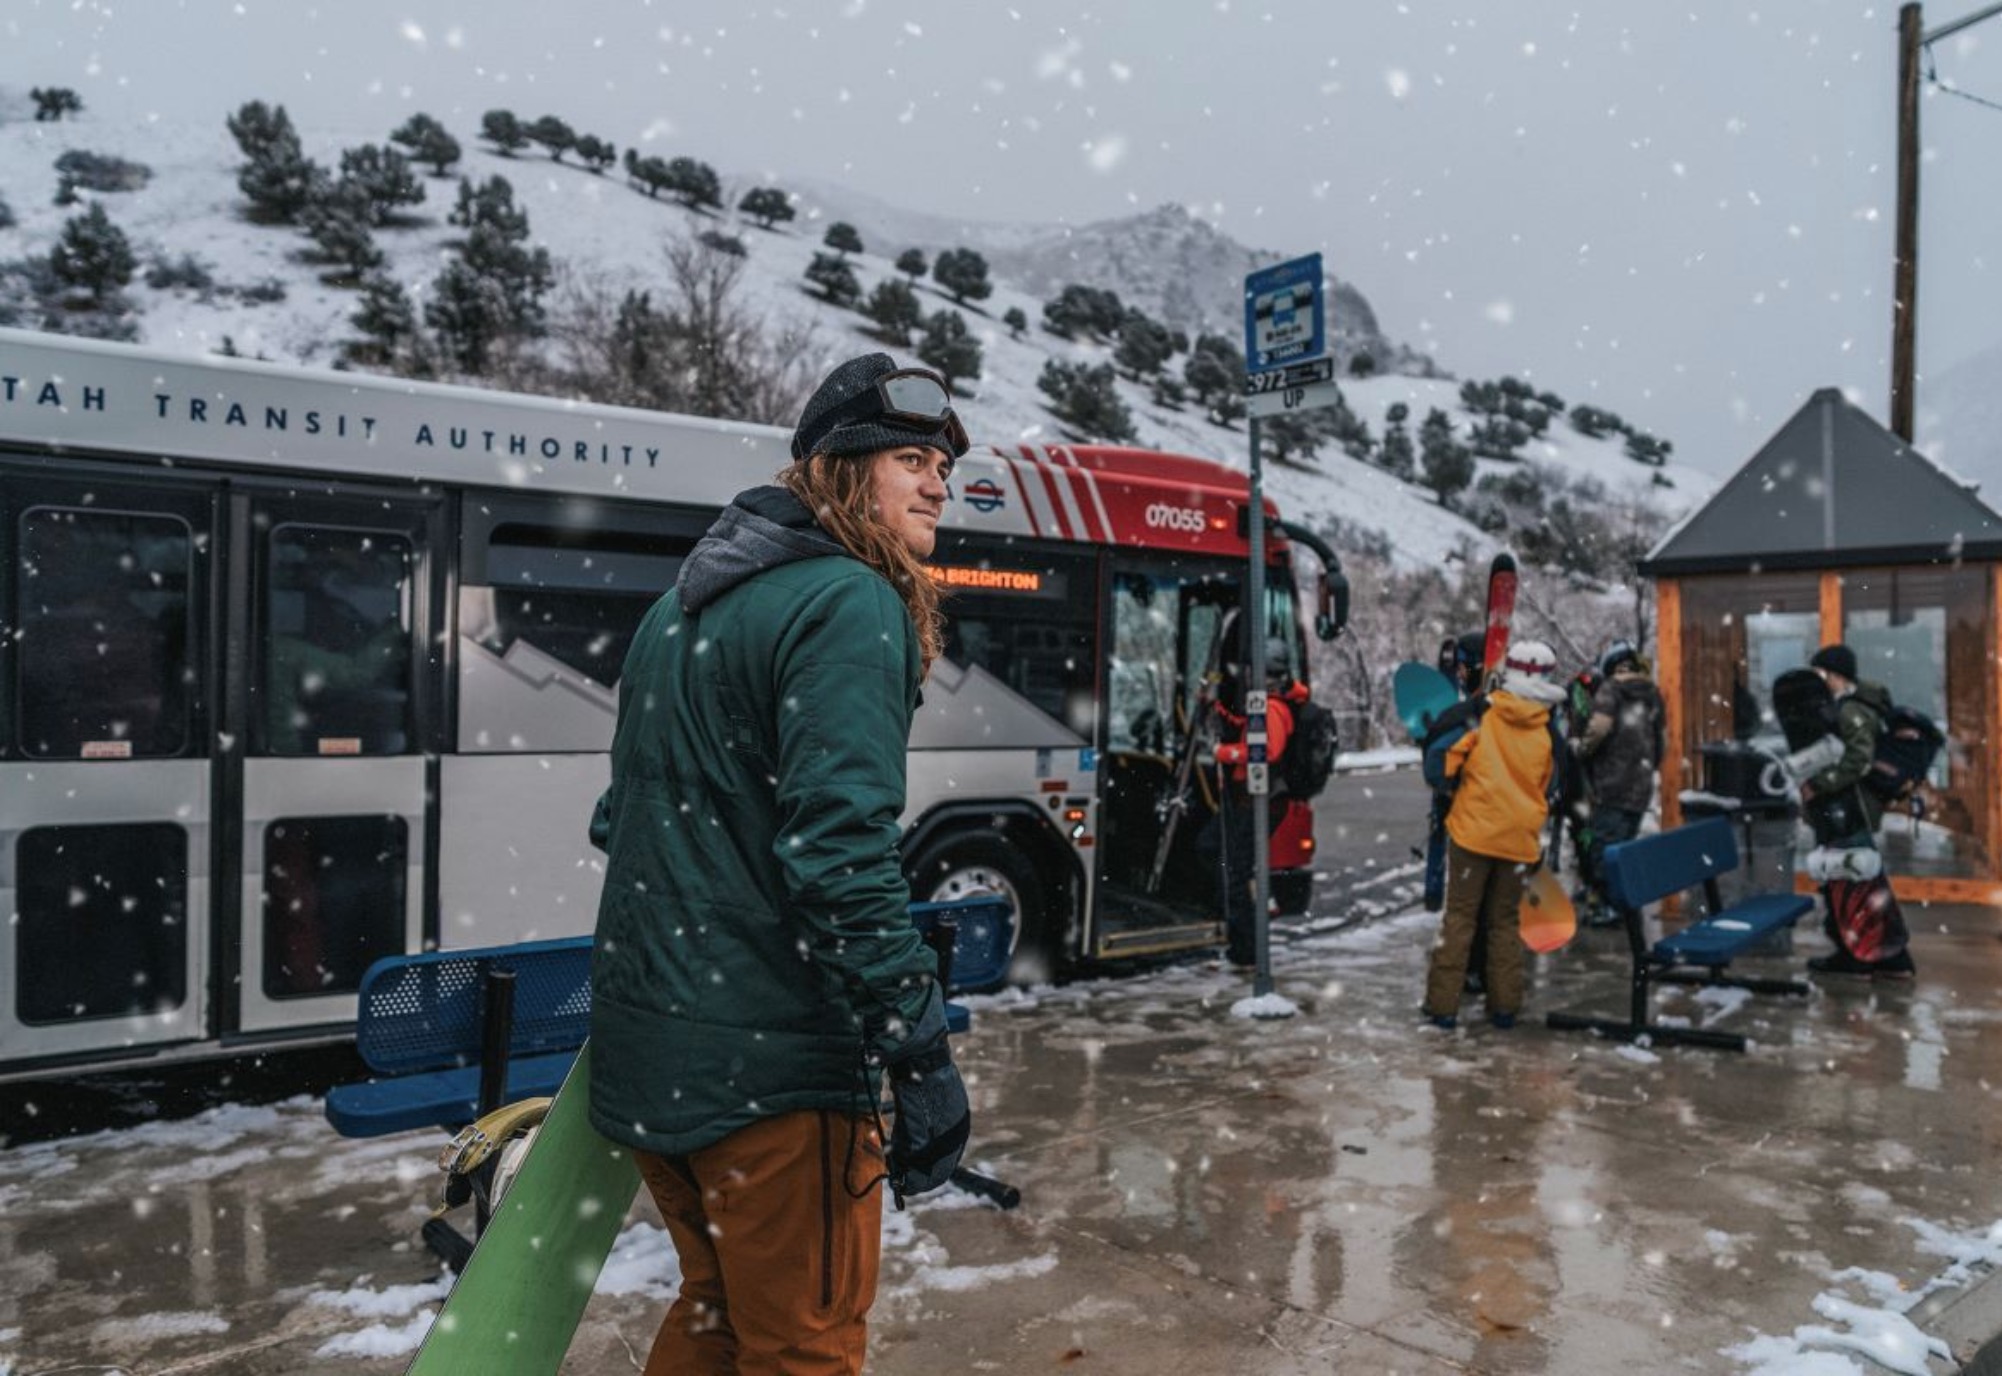 Utah Transit Authority Reducing Ski Buses For This Winter